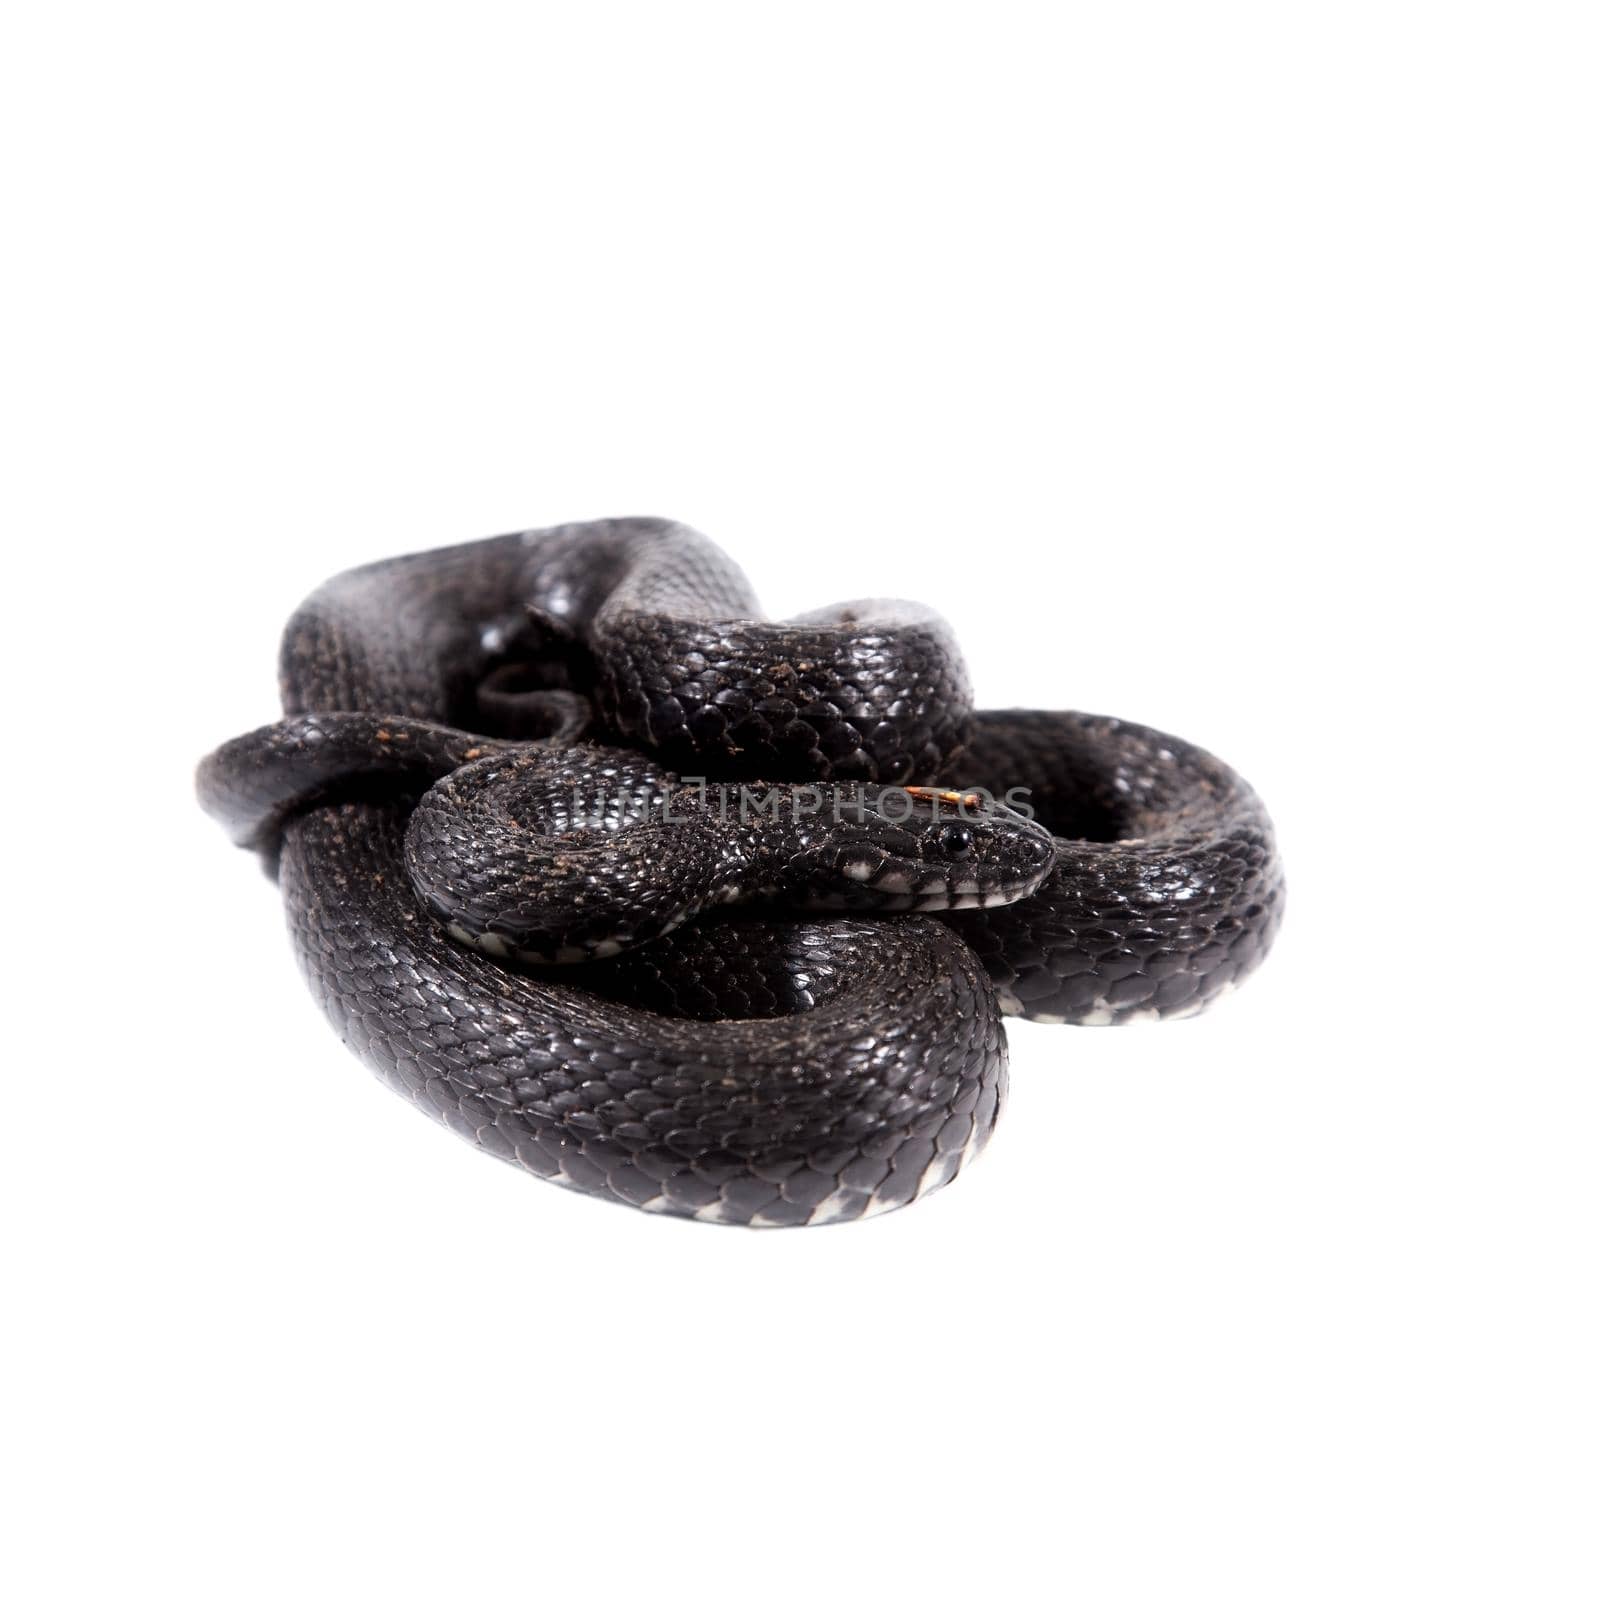 Dice snake, Natrix tessellata, on white by RosaJay